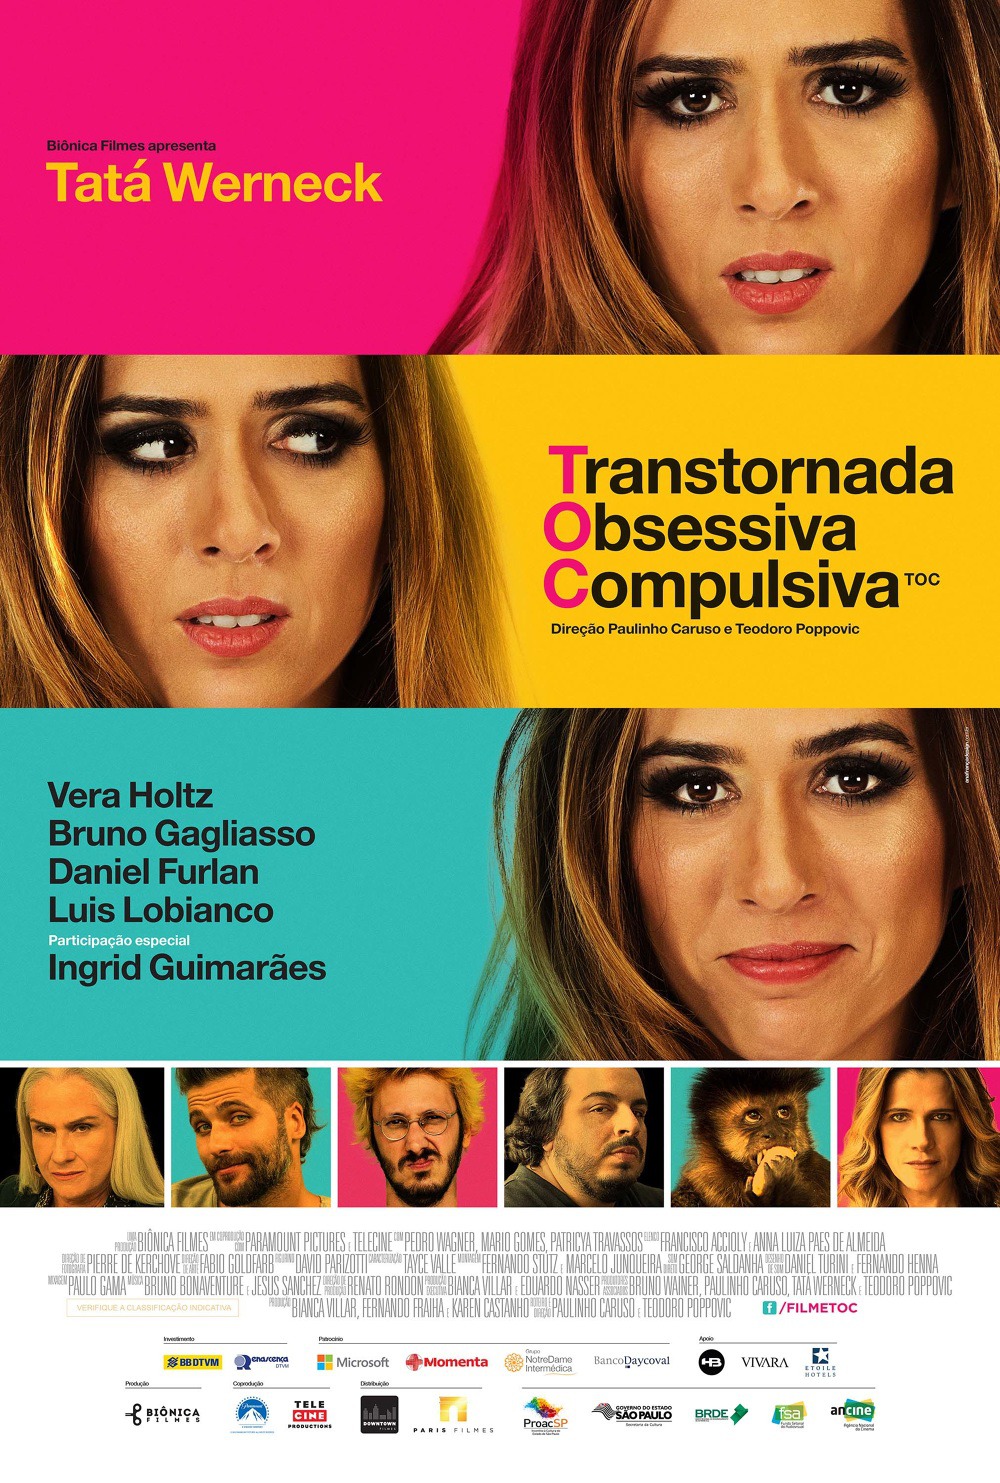 Extra Large Movie Poster Image for TOC: Transtornada Obsessiva Compulsiva 